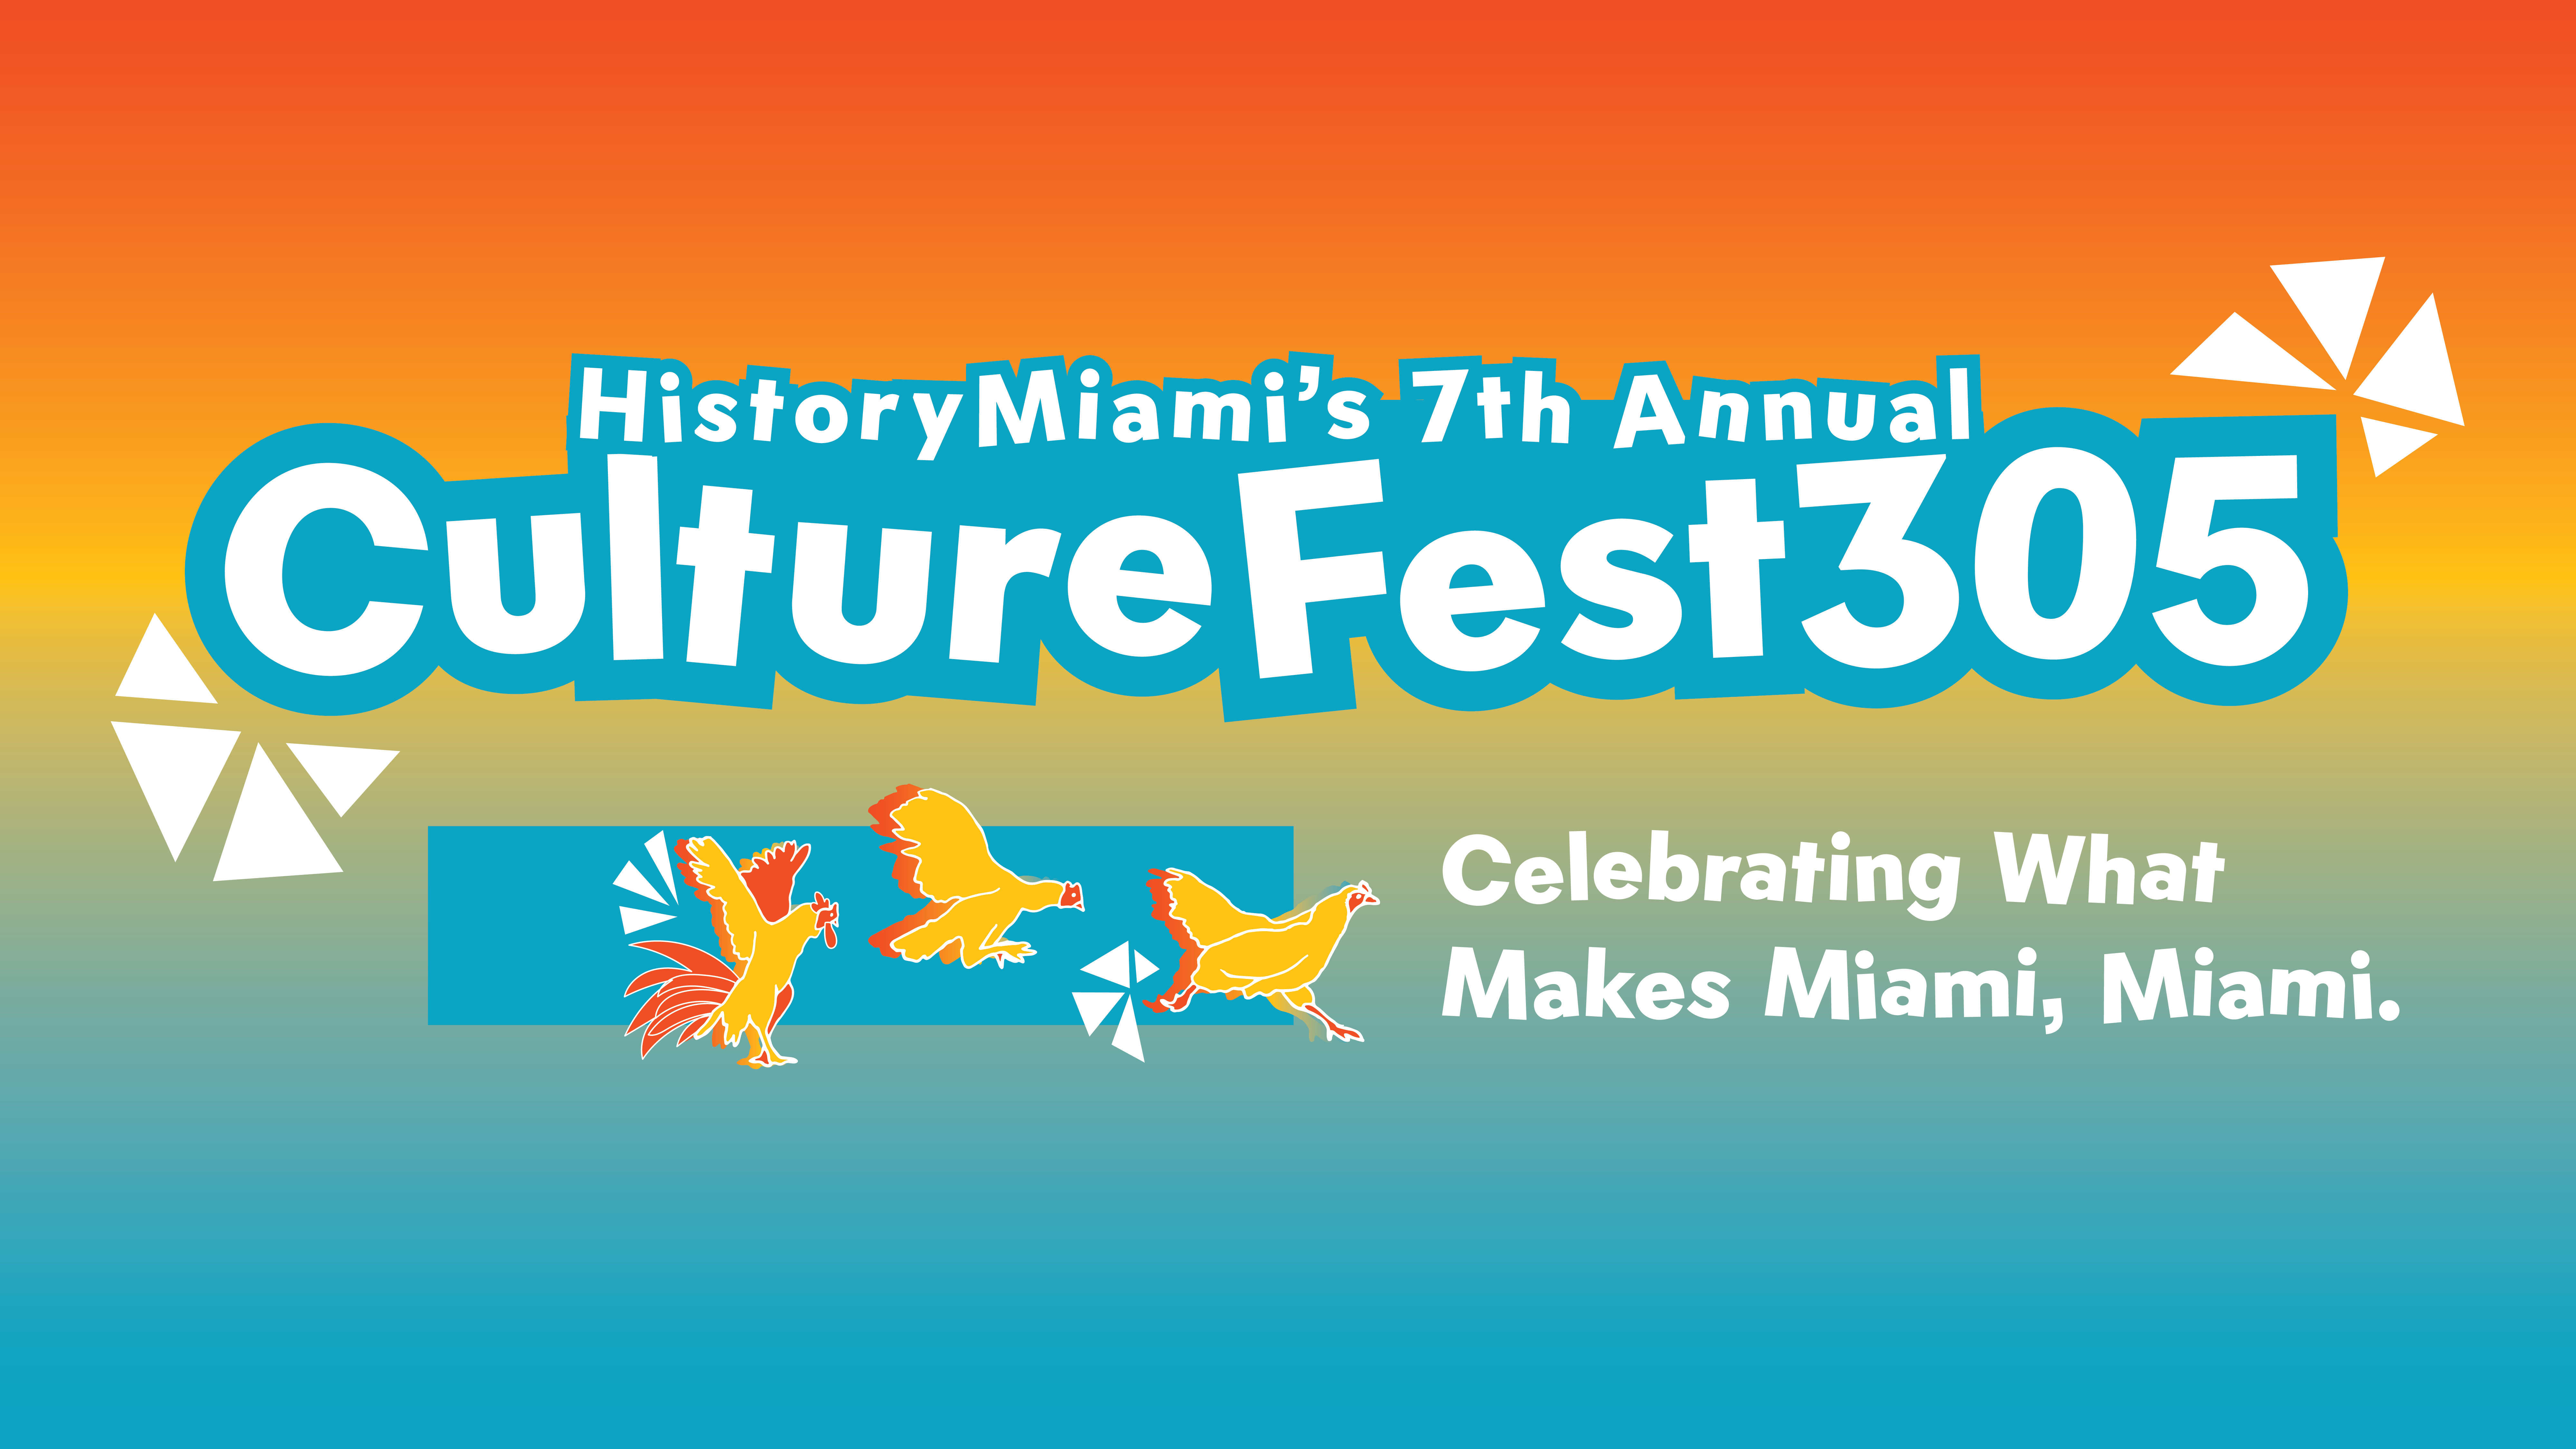 CultureFest 305 at HistoryMiami